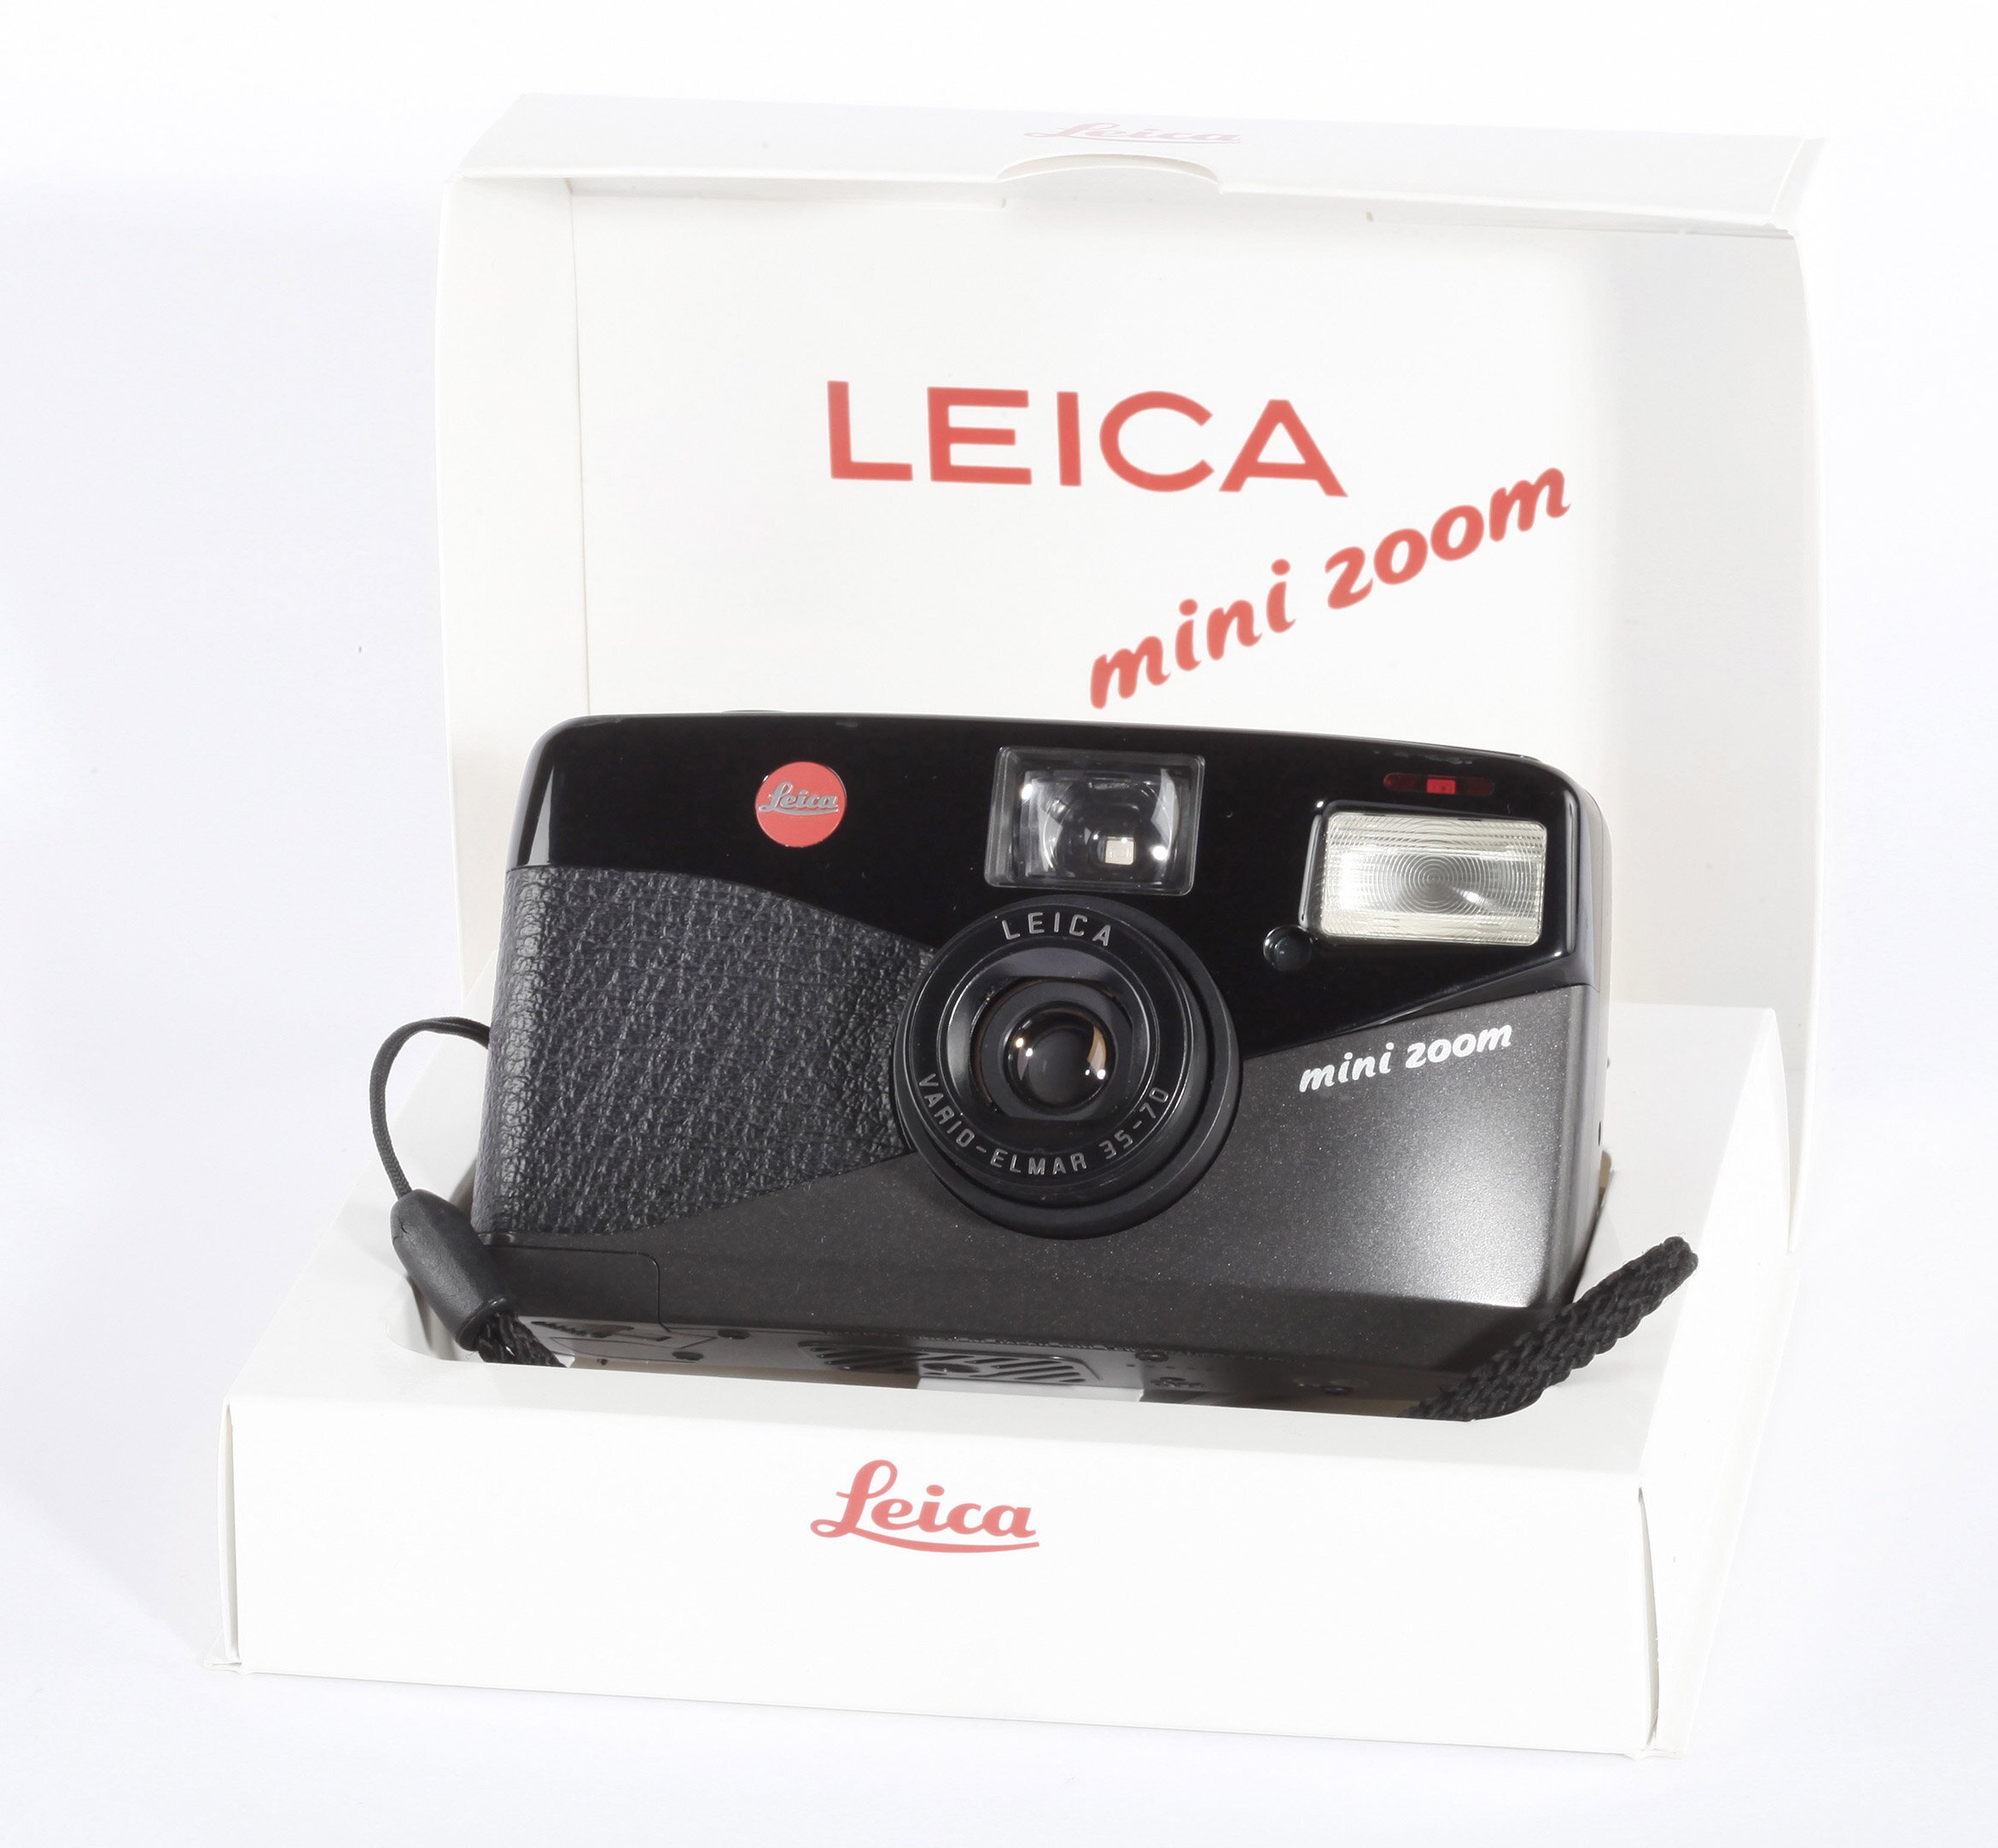 Leica mini zoom #18005